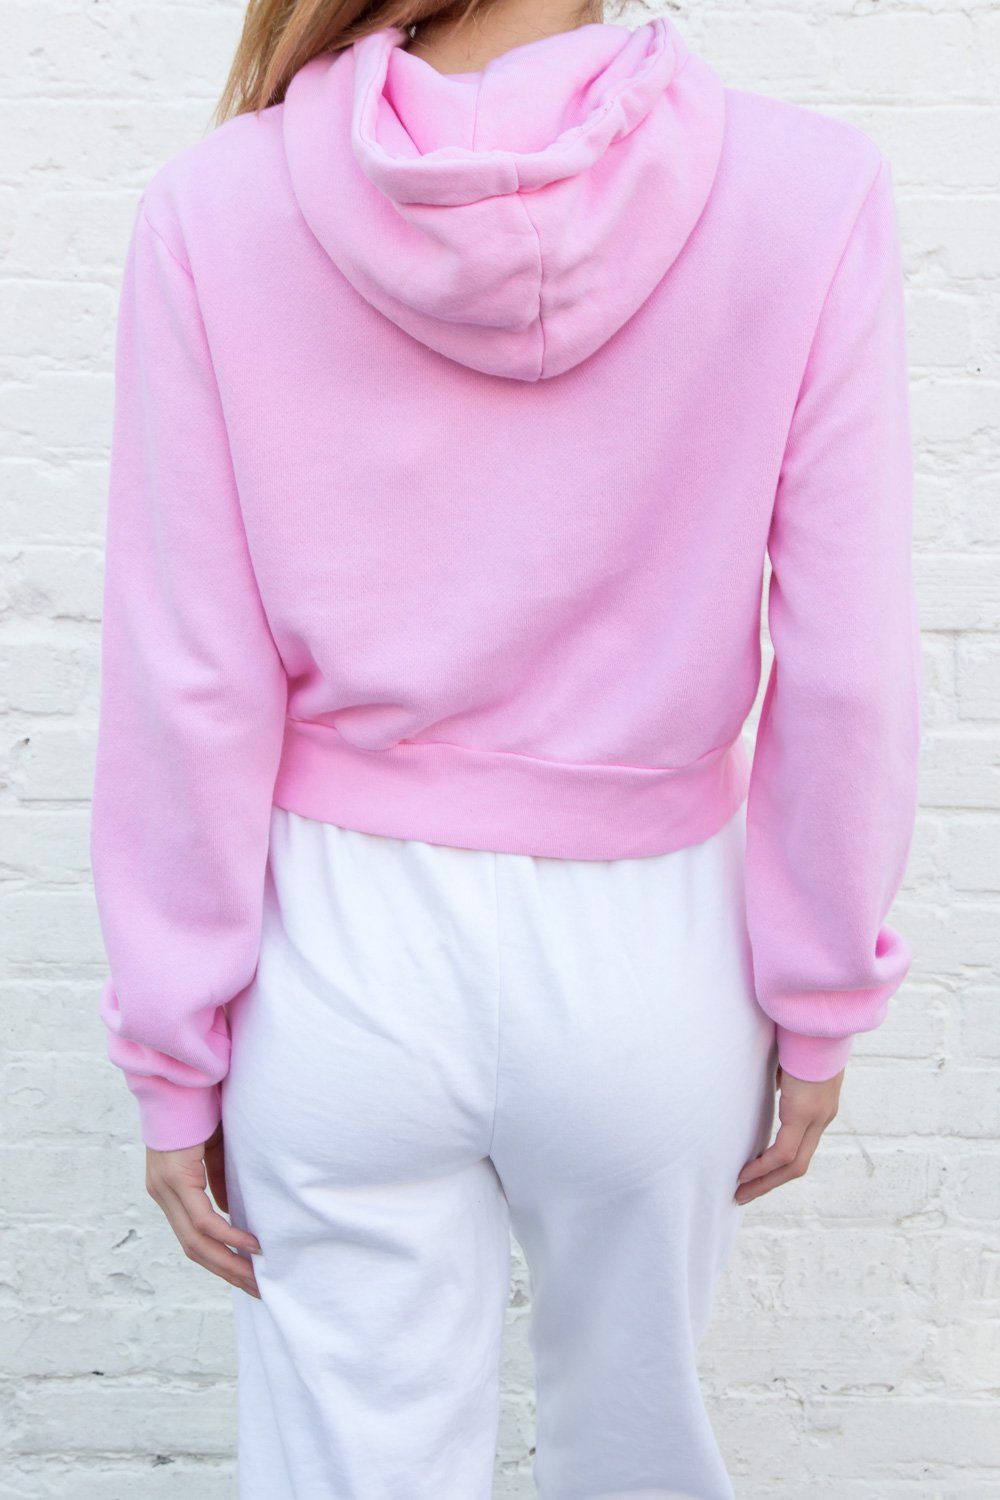 Brandy Melville / John Galt bubblegum pink crystal zip up hoodie, Women's  Fashion, Coats, Jackets and Outerwear on Carousell